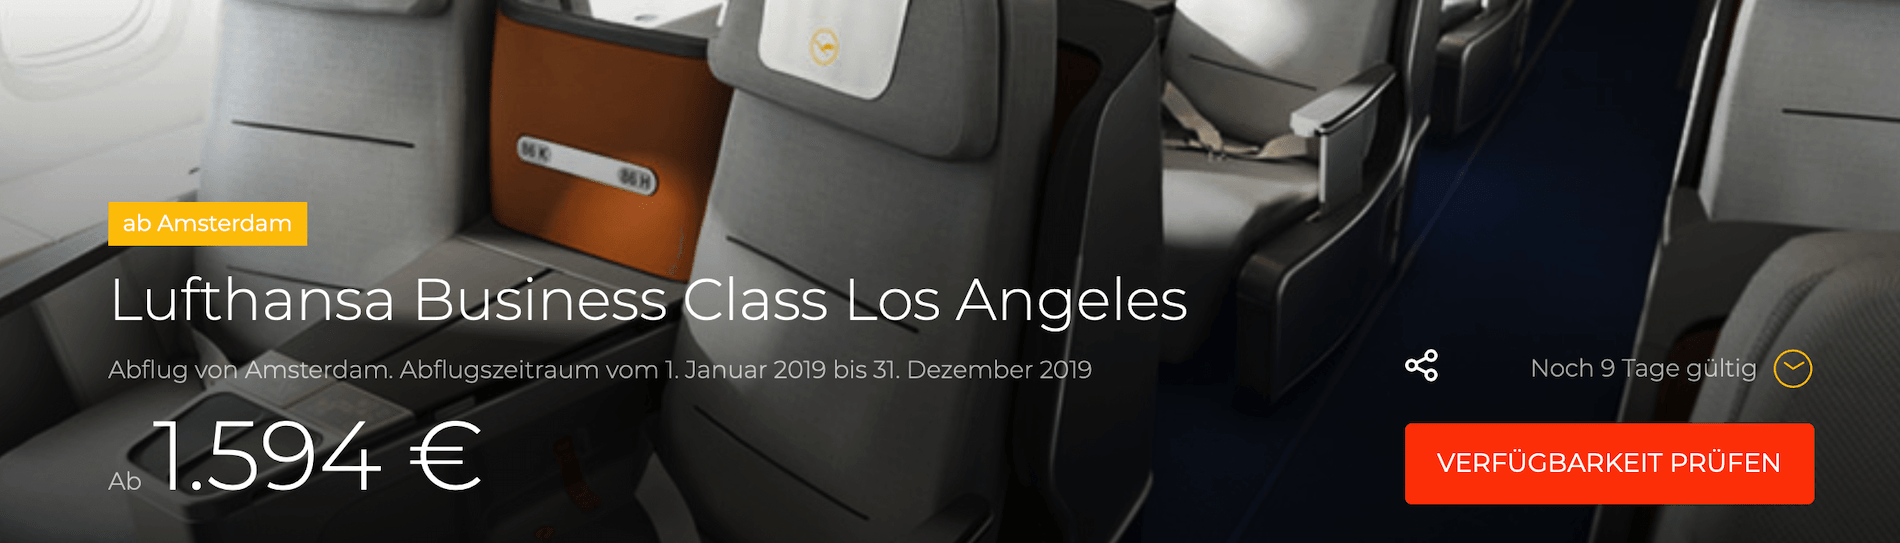 Lufthansa Business Class nach Los Angeles 1594€